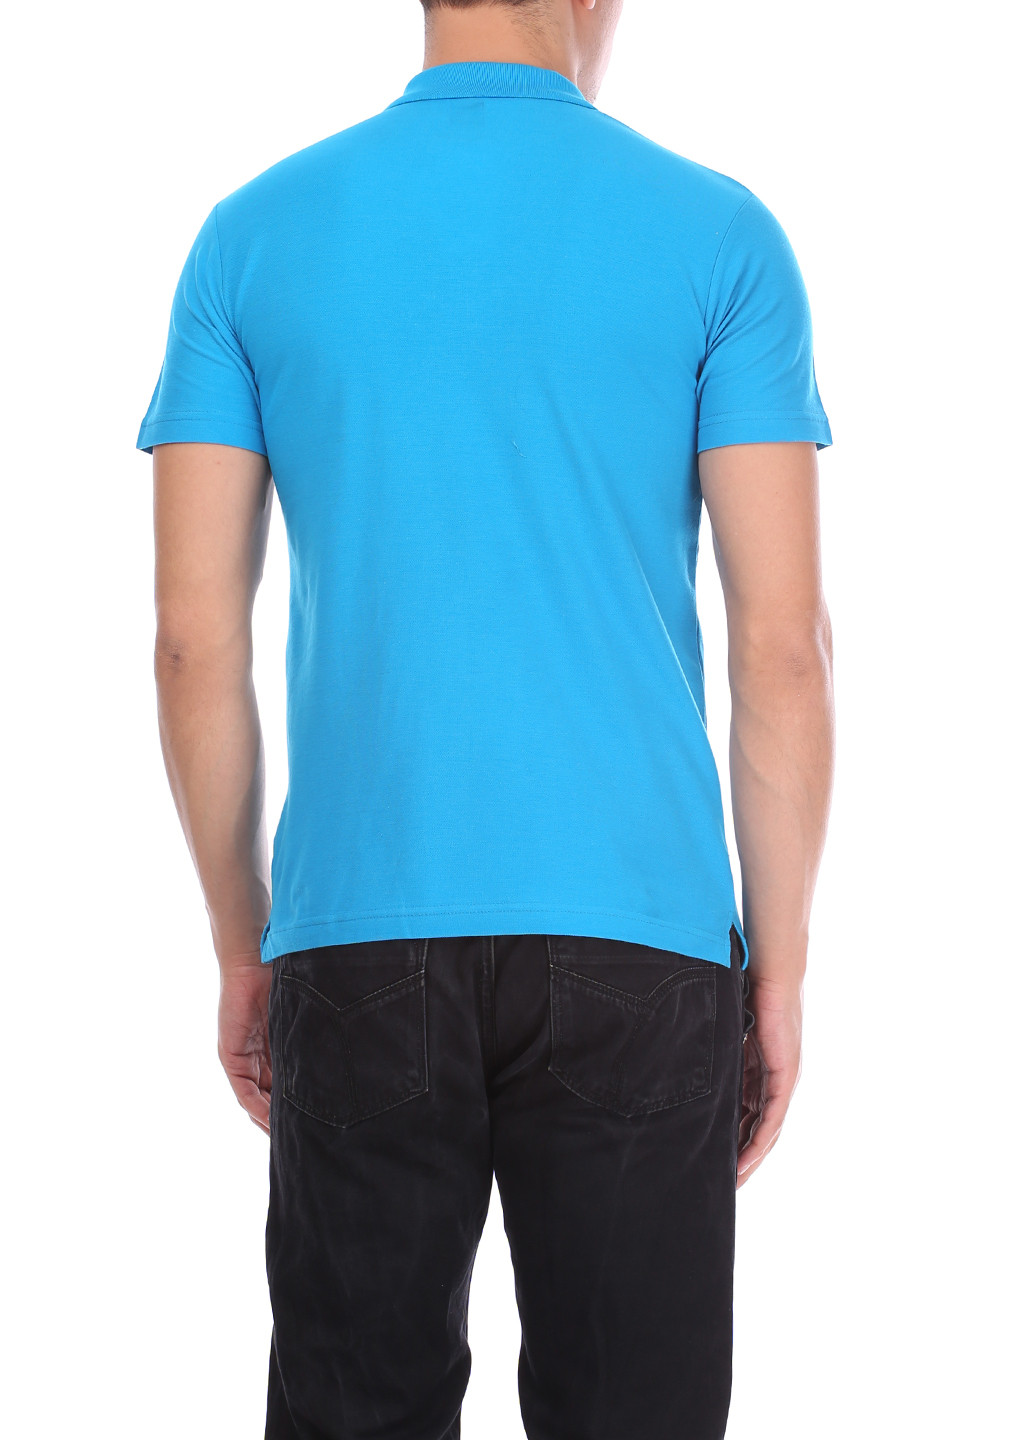 Голубой футболка-поло для мужчин Sol's с орнаментом